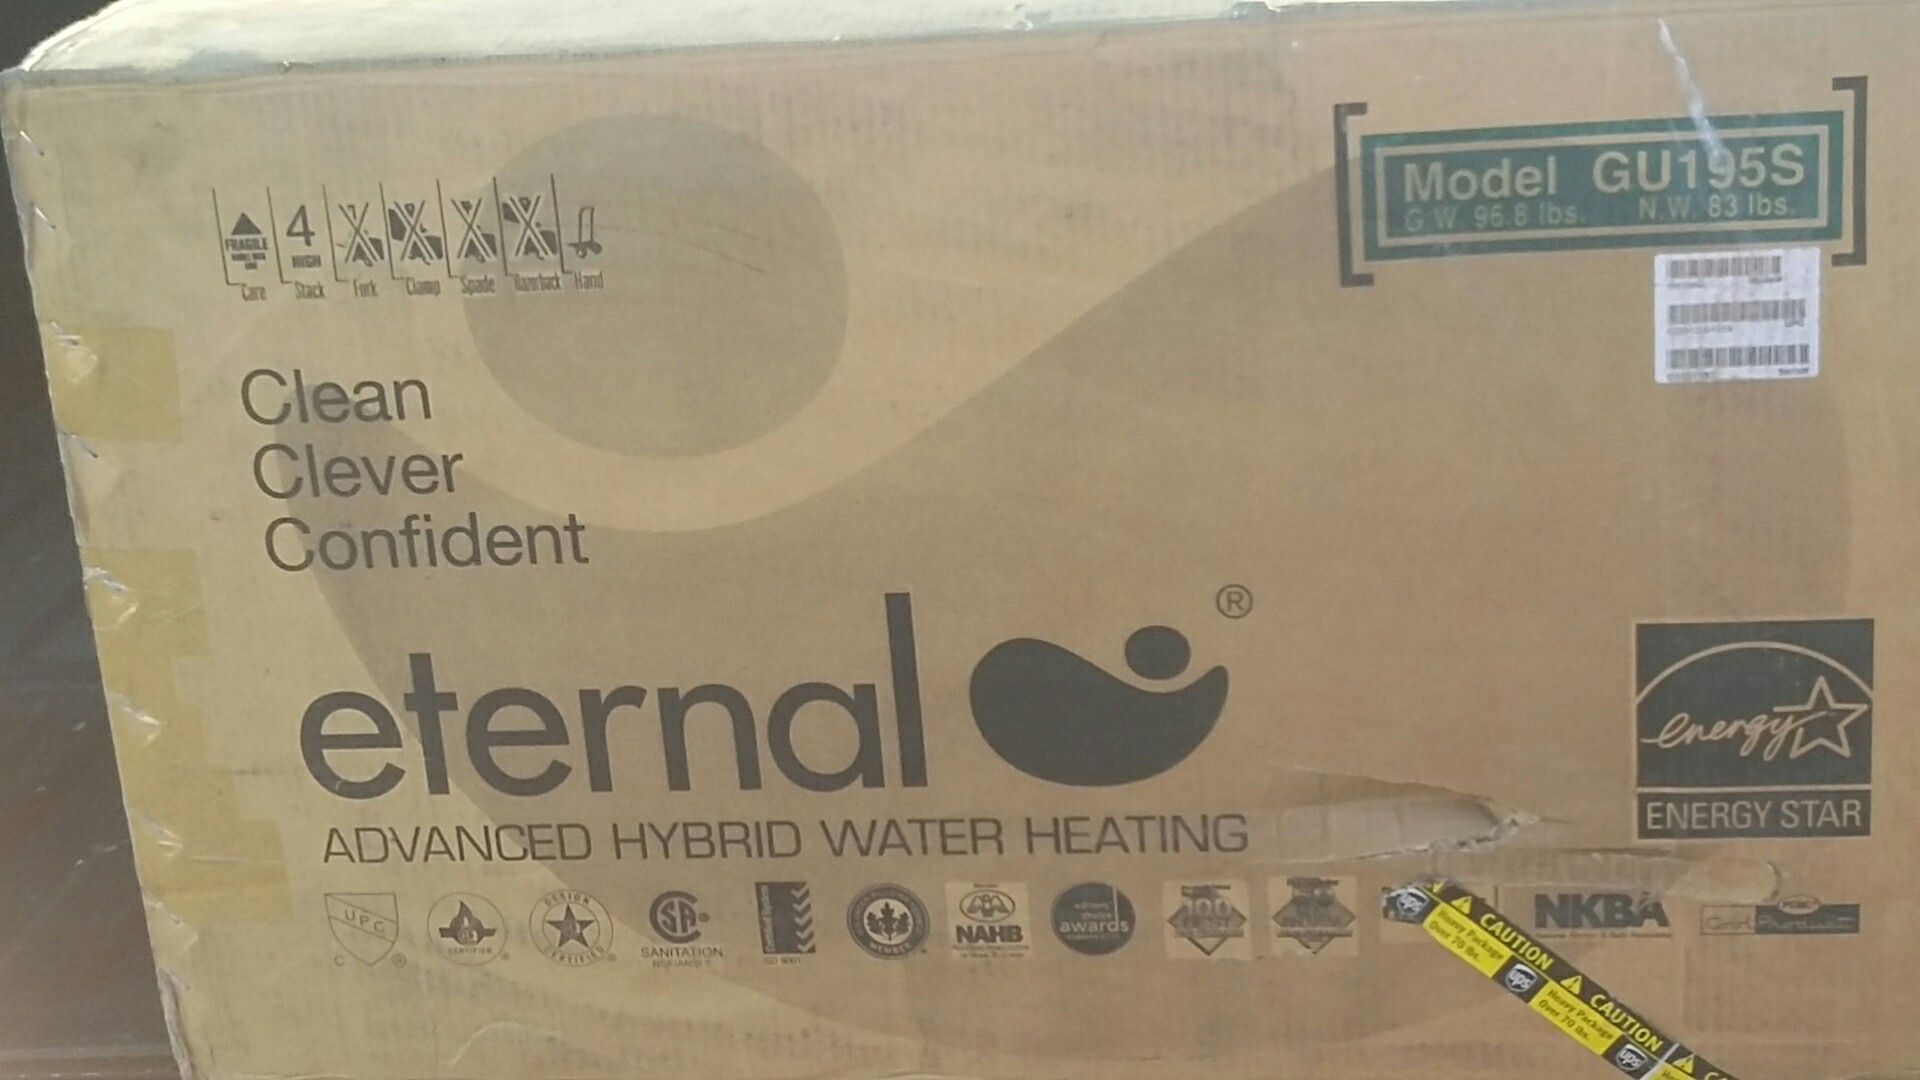 Eternal advanced hybrid water heater